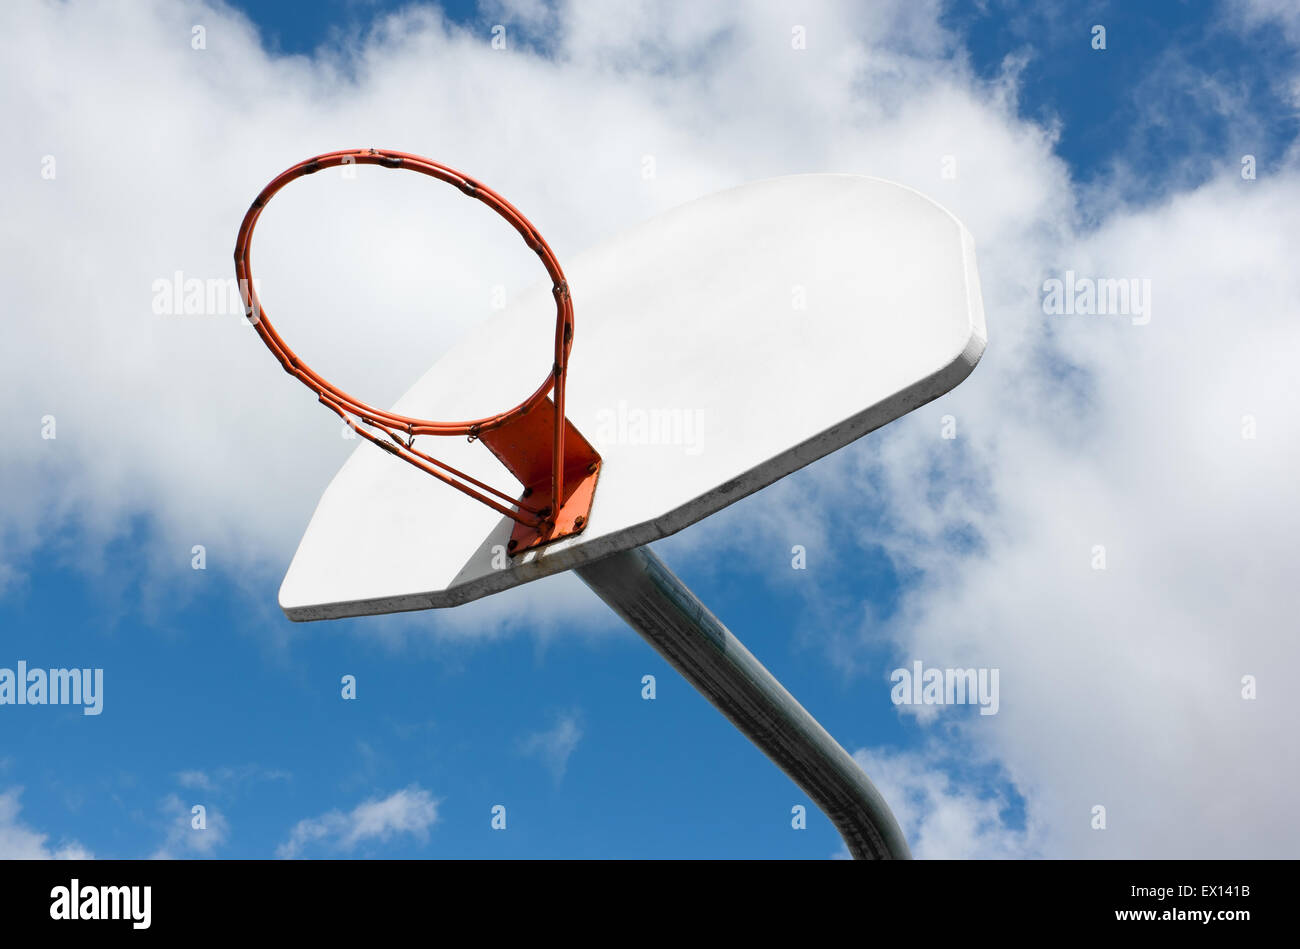 Outdoor basketball hoop and sky. Stock Photo